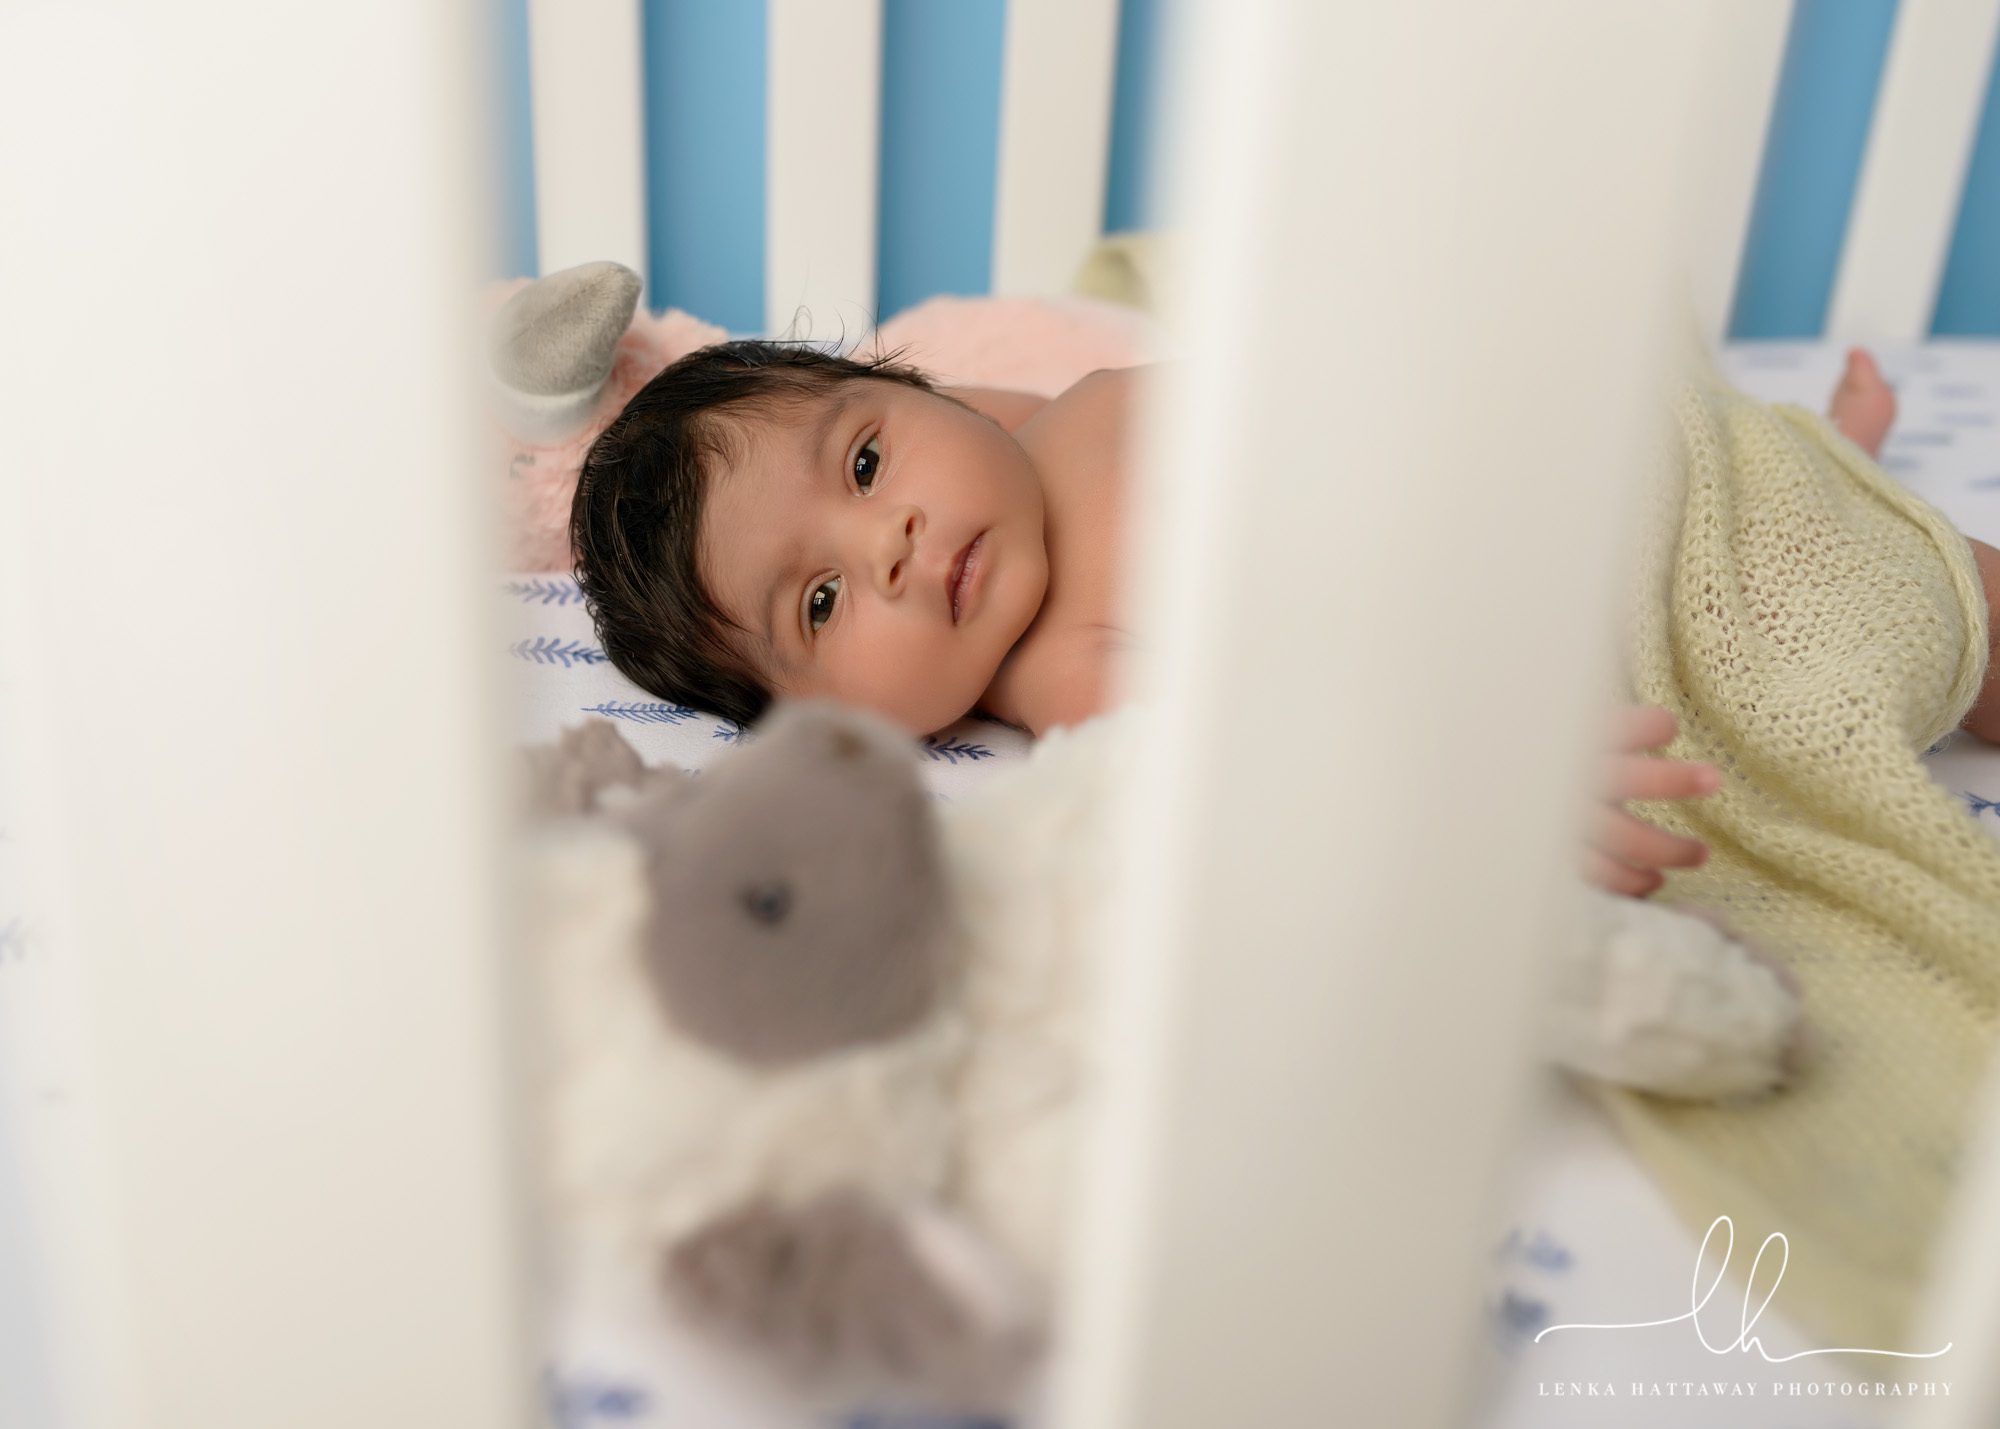 Bautiful newborn baby in a crib looking at the camera.